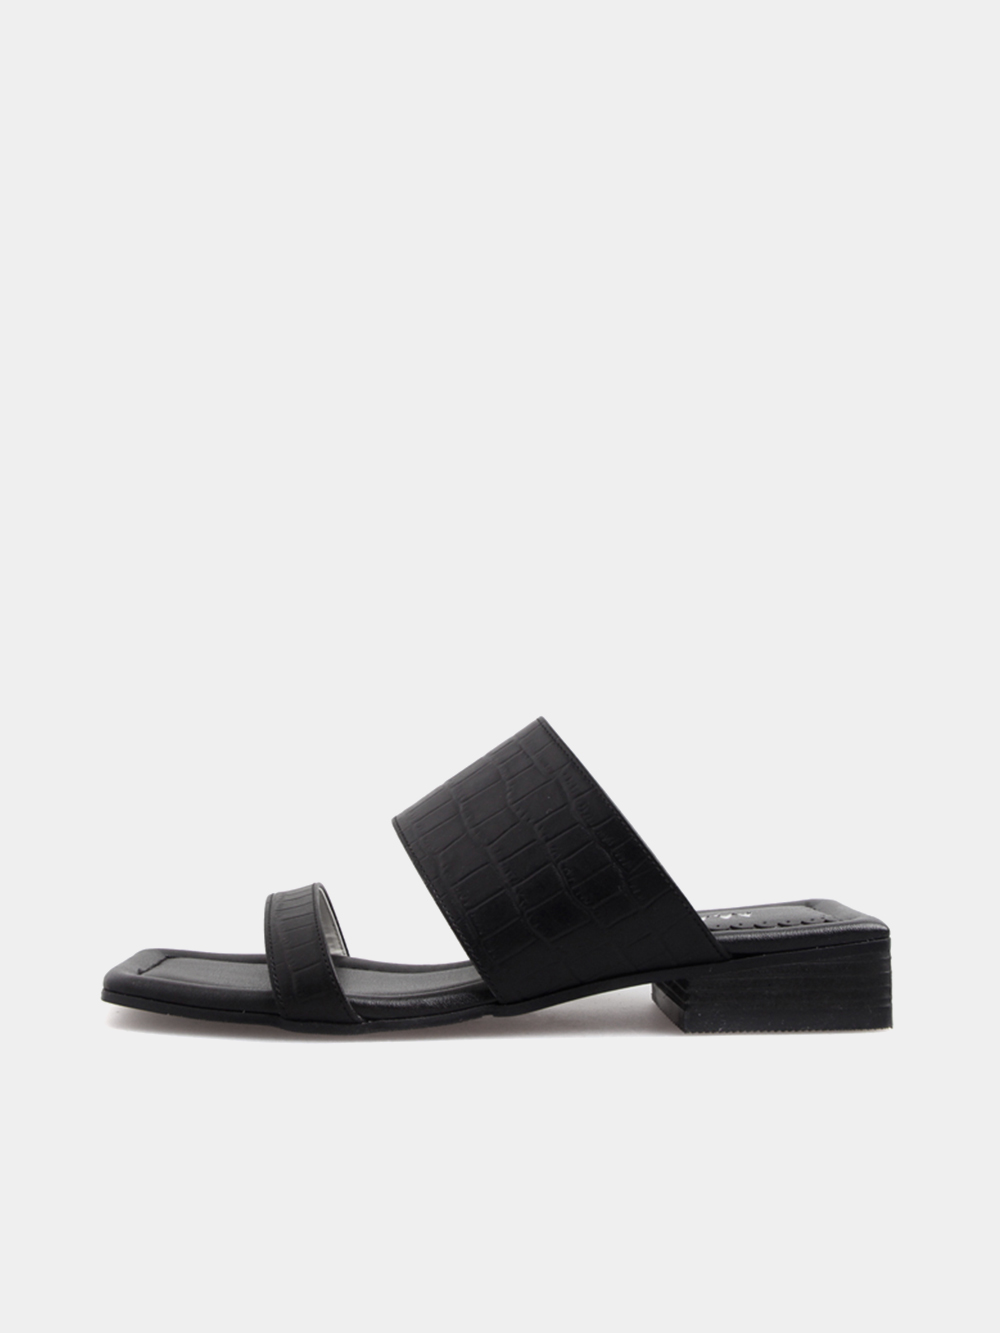 [Out of stock] Mrc03s Urban Flat Sandal (Black Crack)